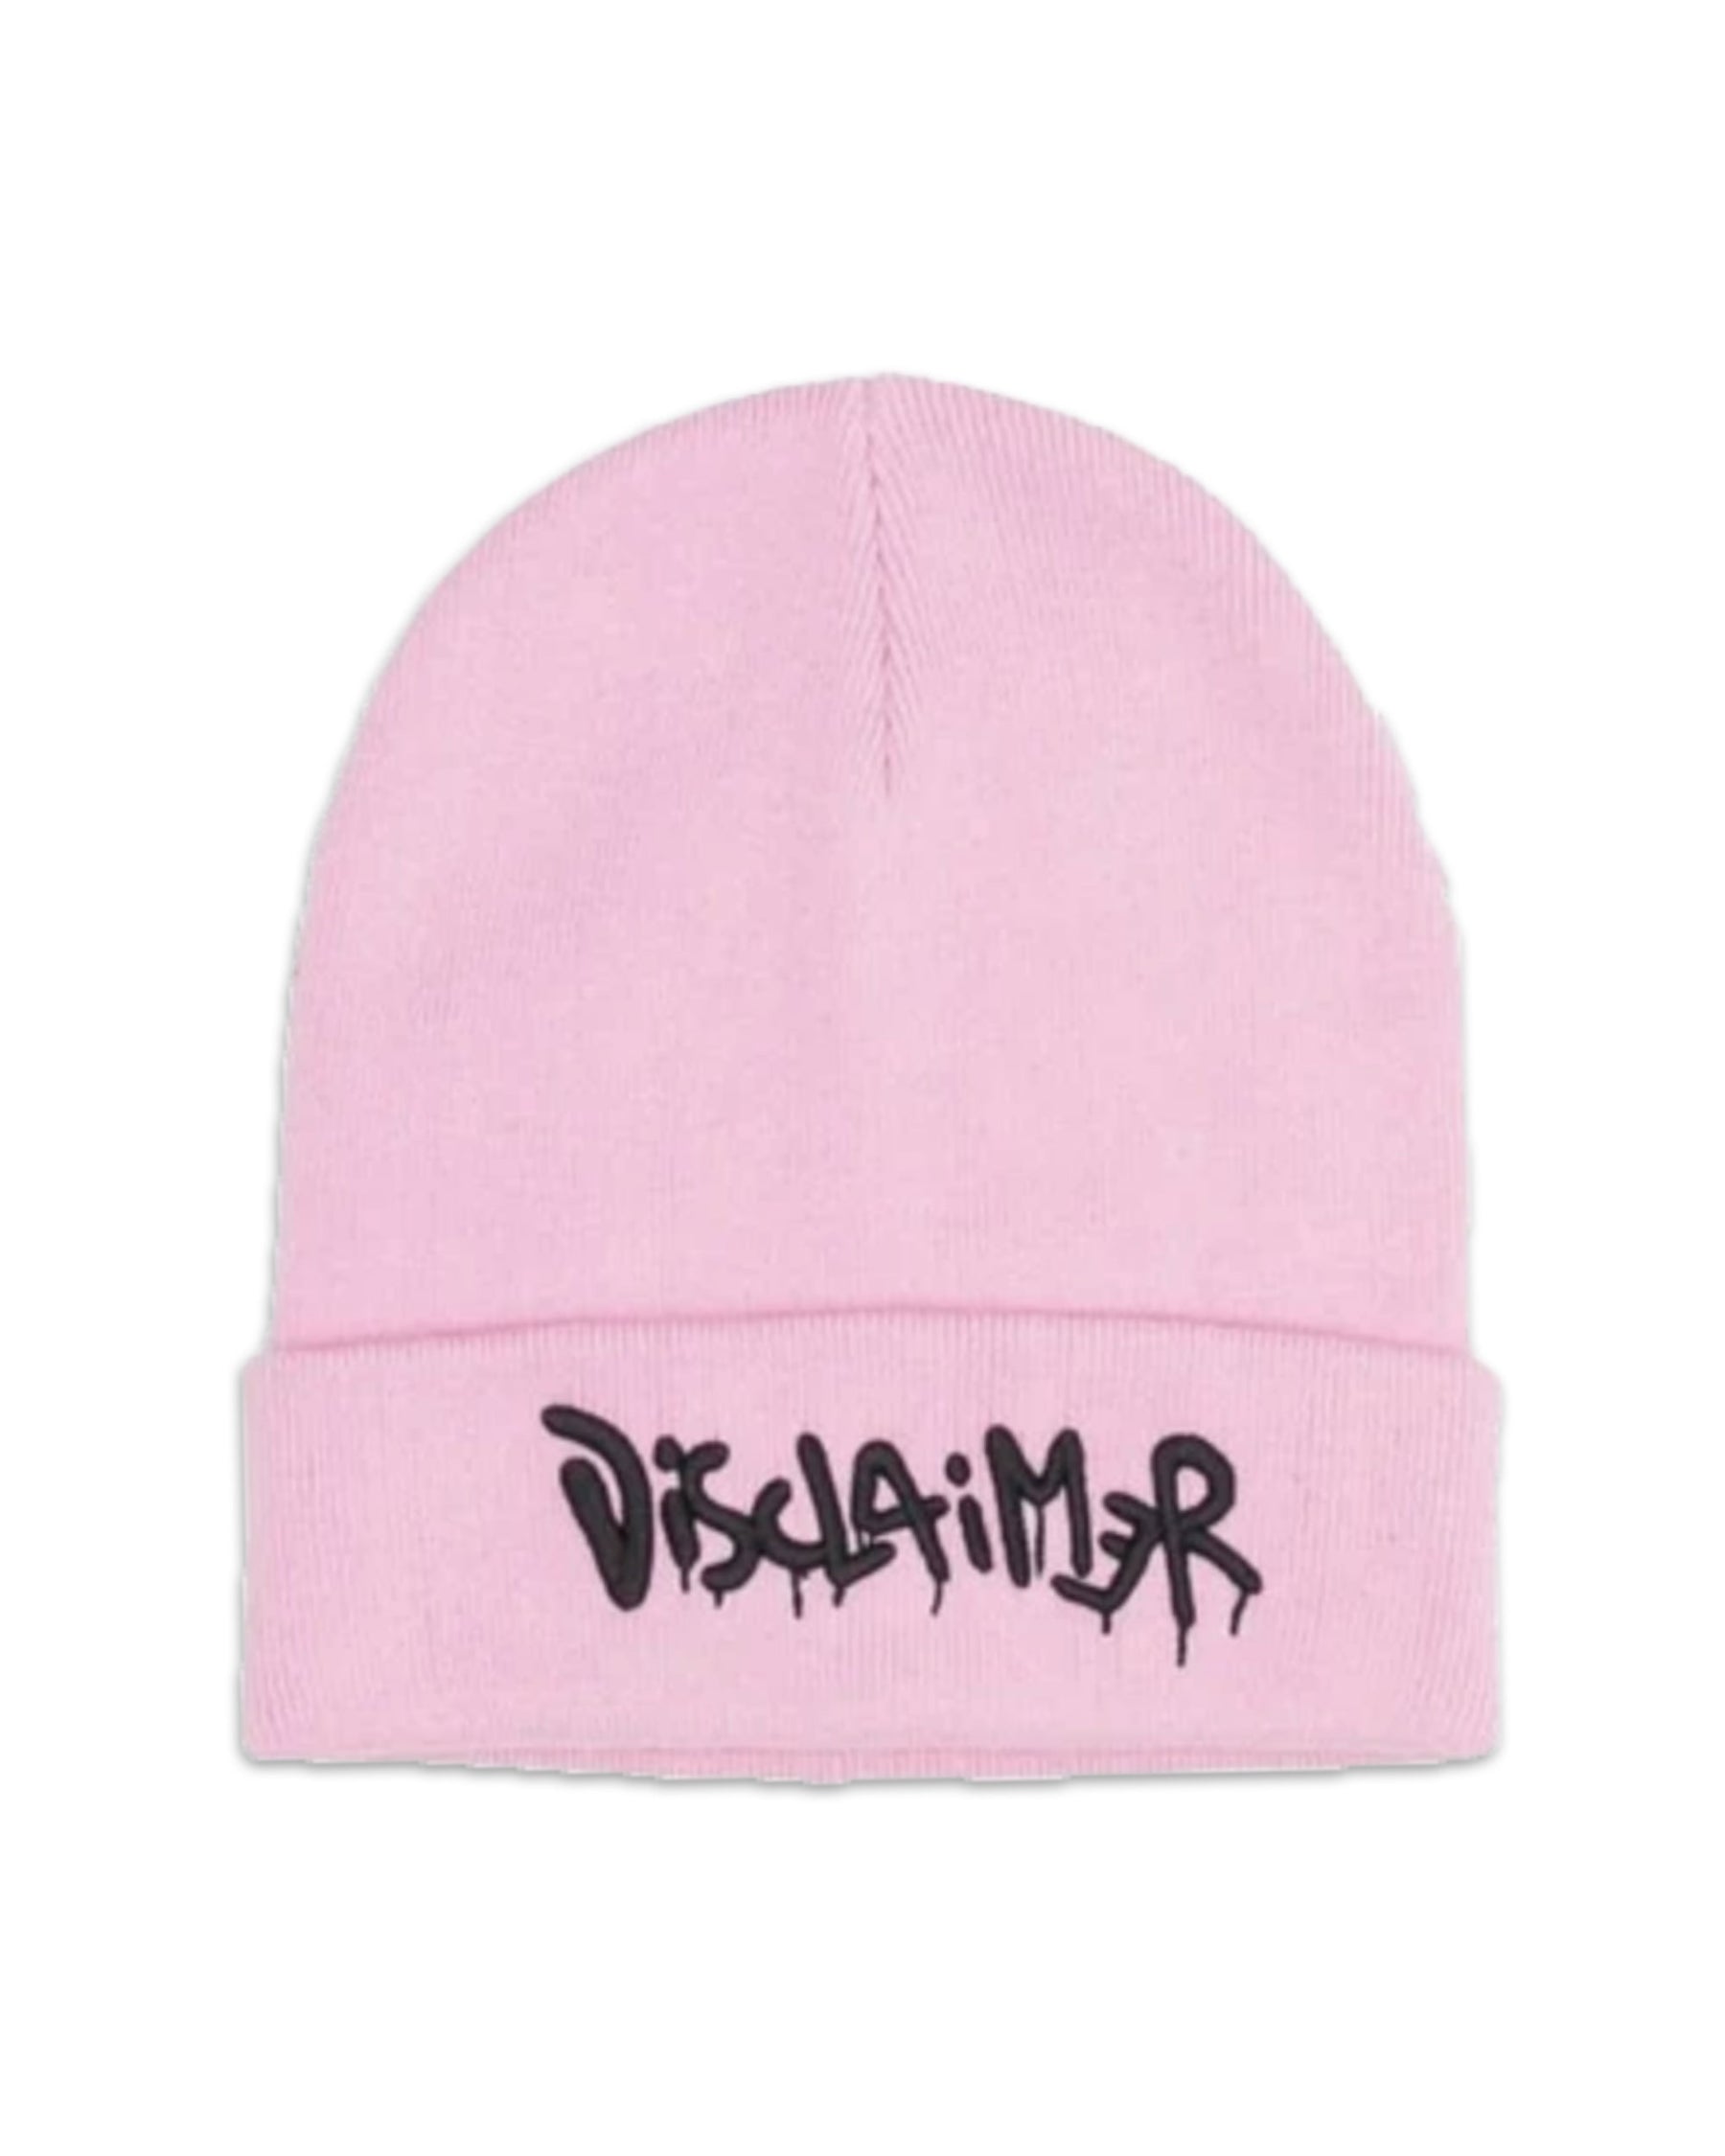 Beanie Hat Disclaimer Pink